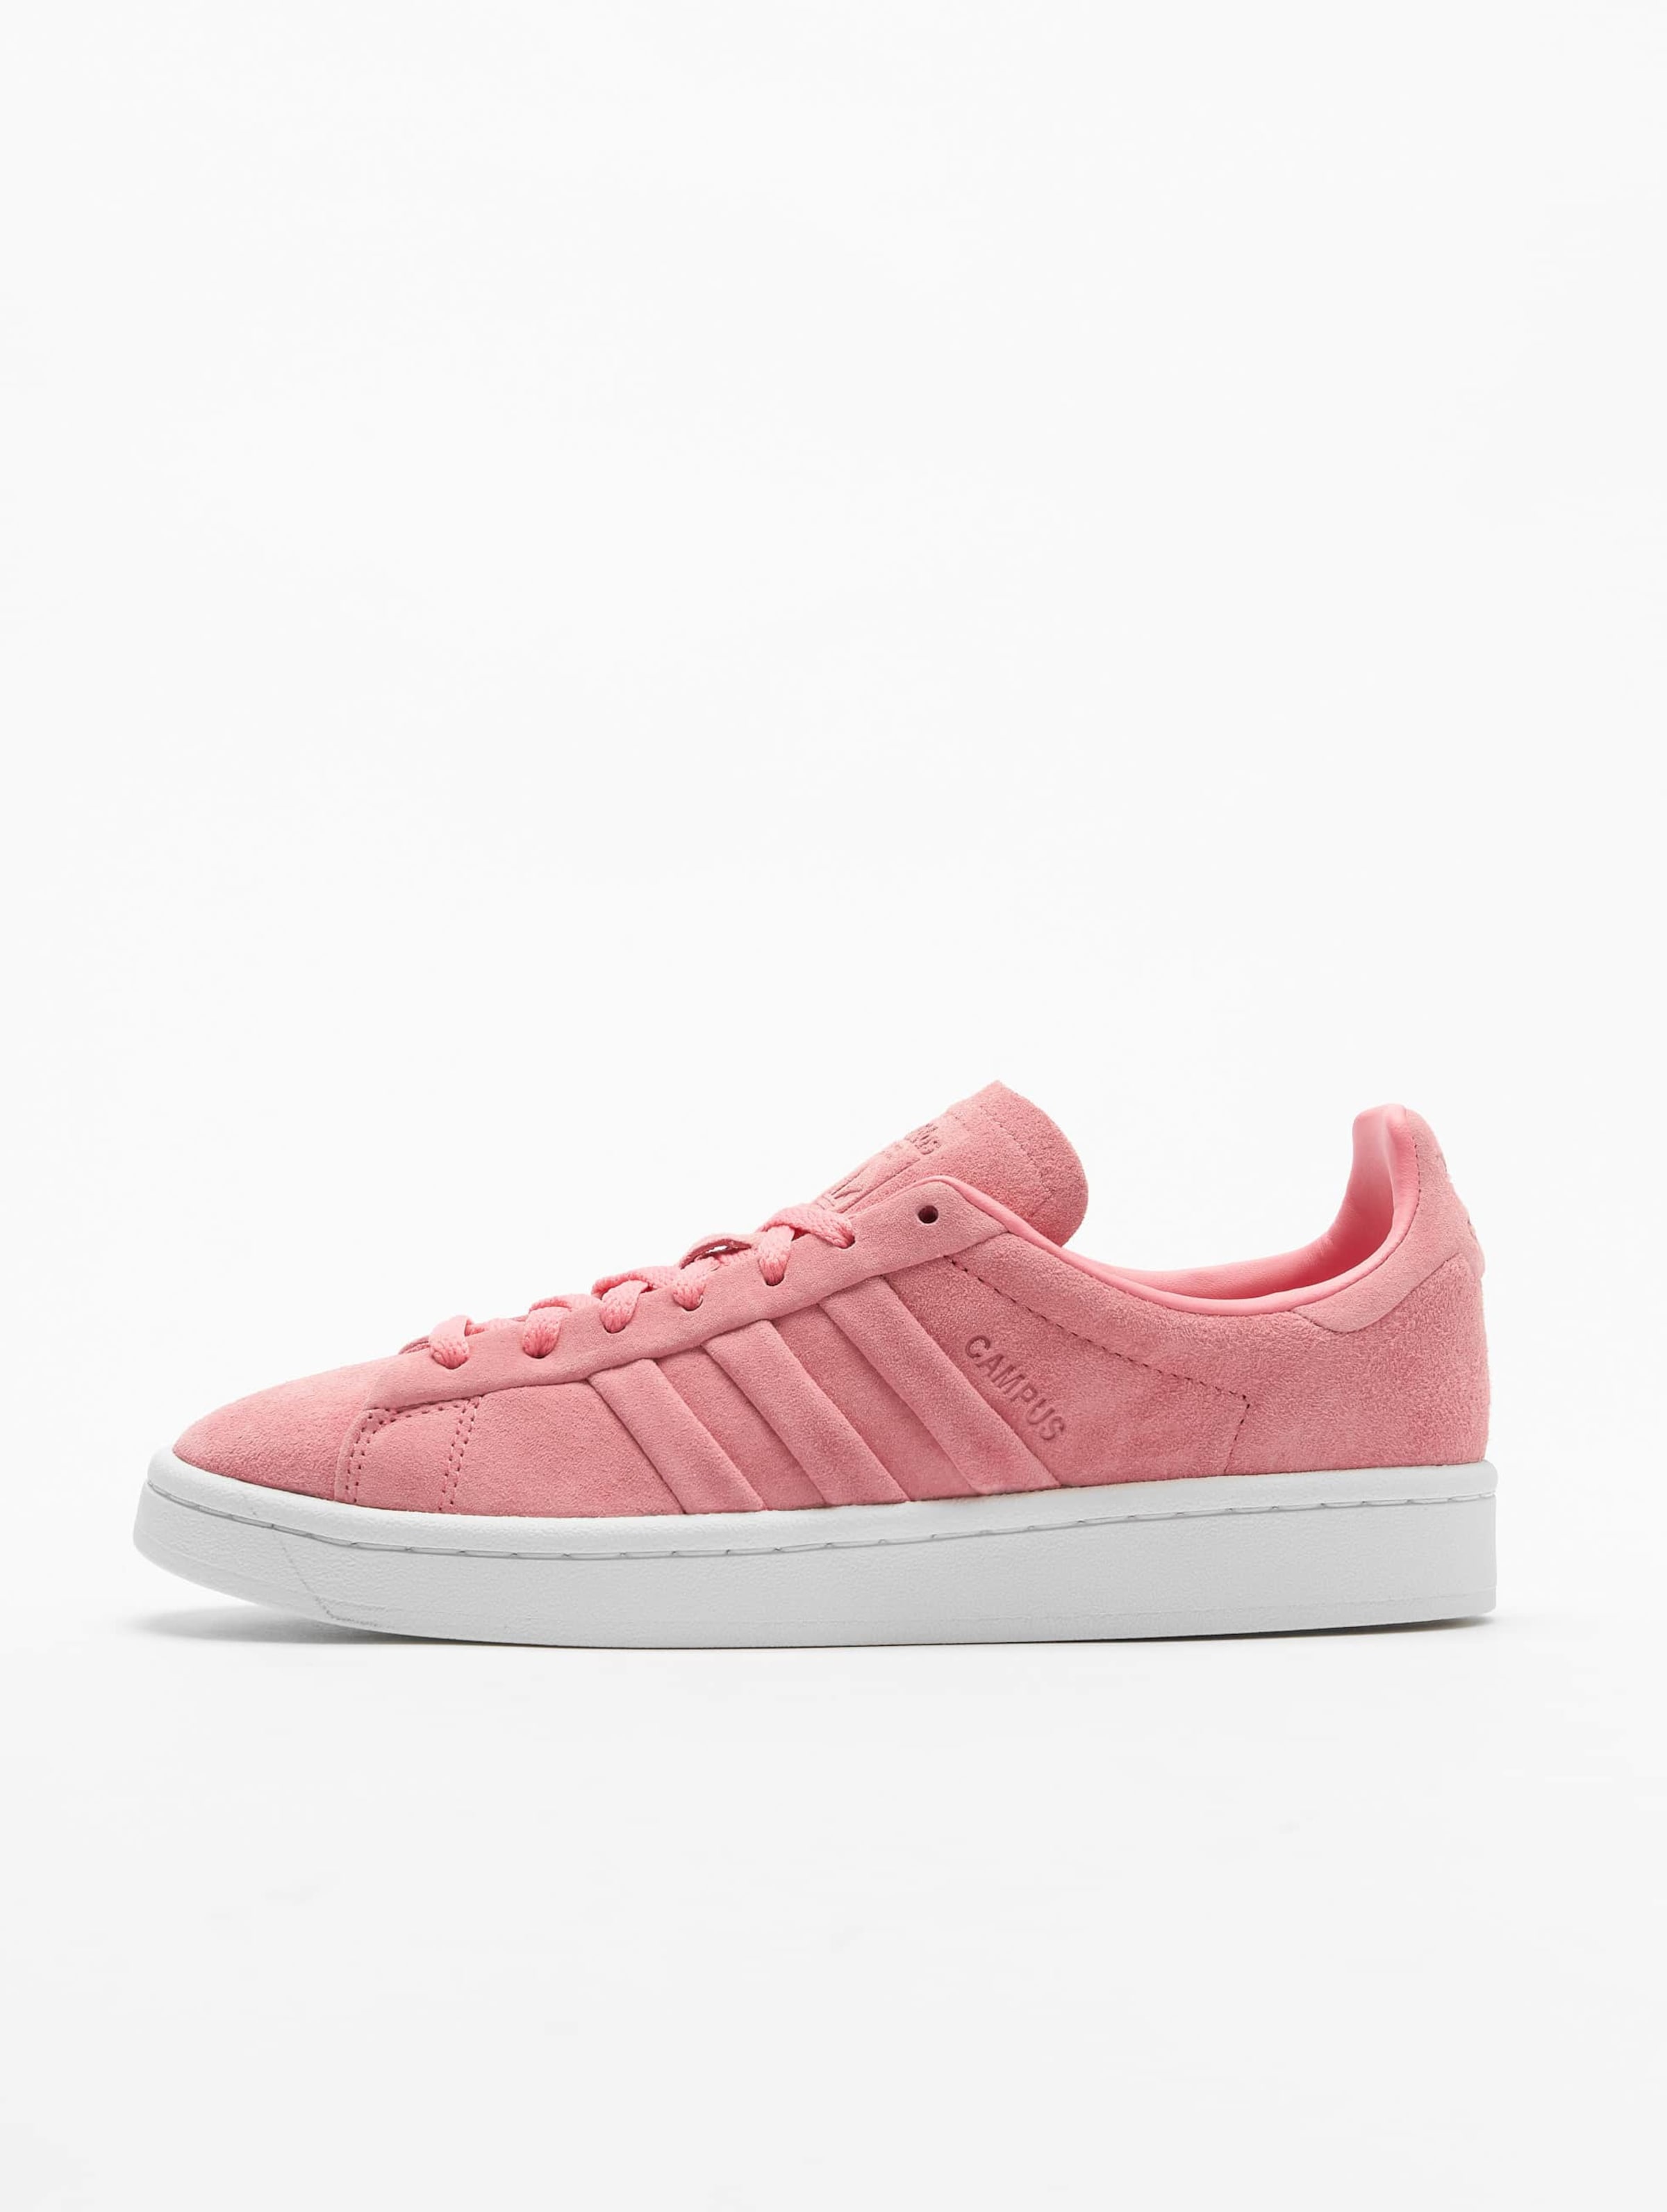 adidas Originals Campus Stitch And Turn Sneaker Vrouwen op kleur roze, Maat 36 2/3